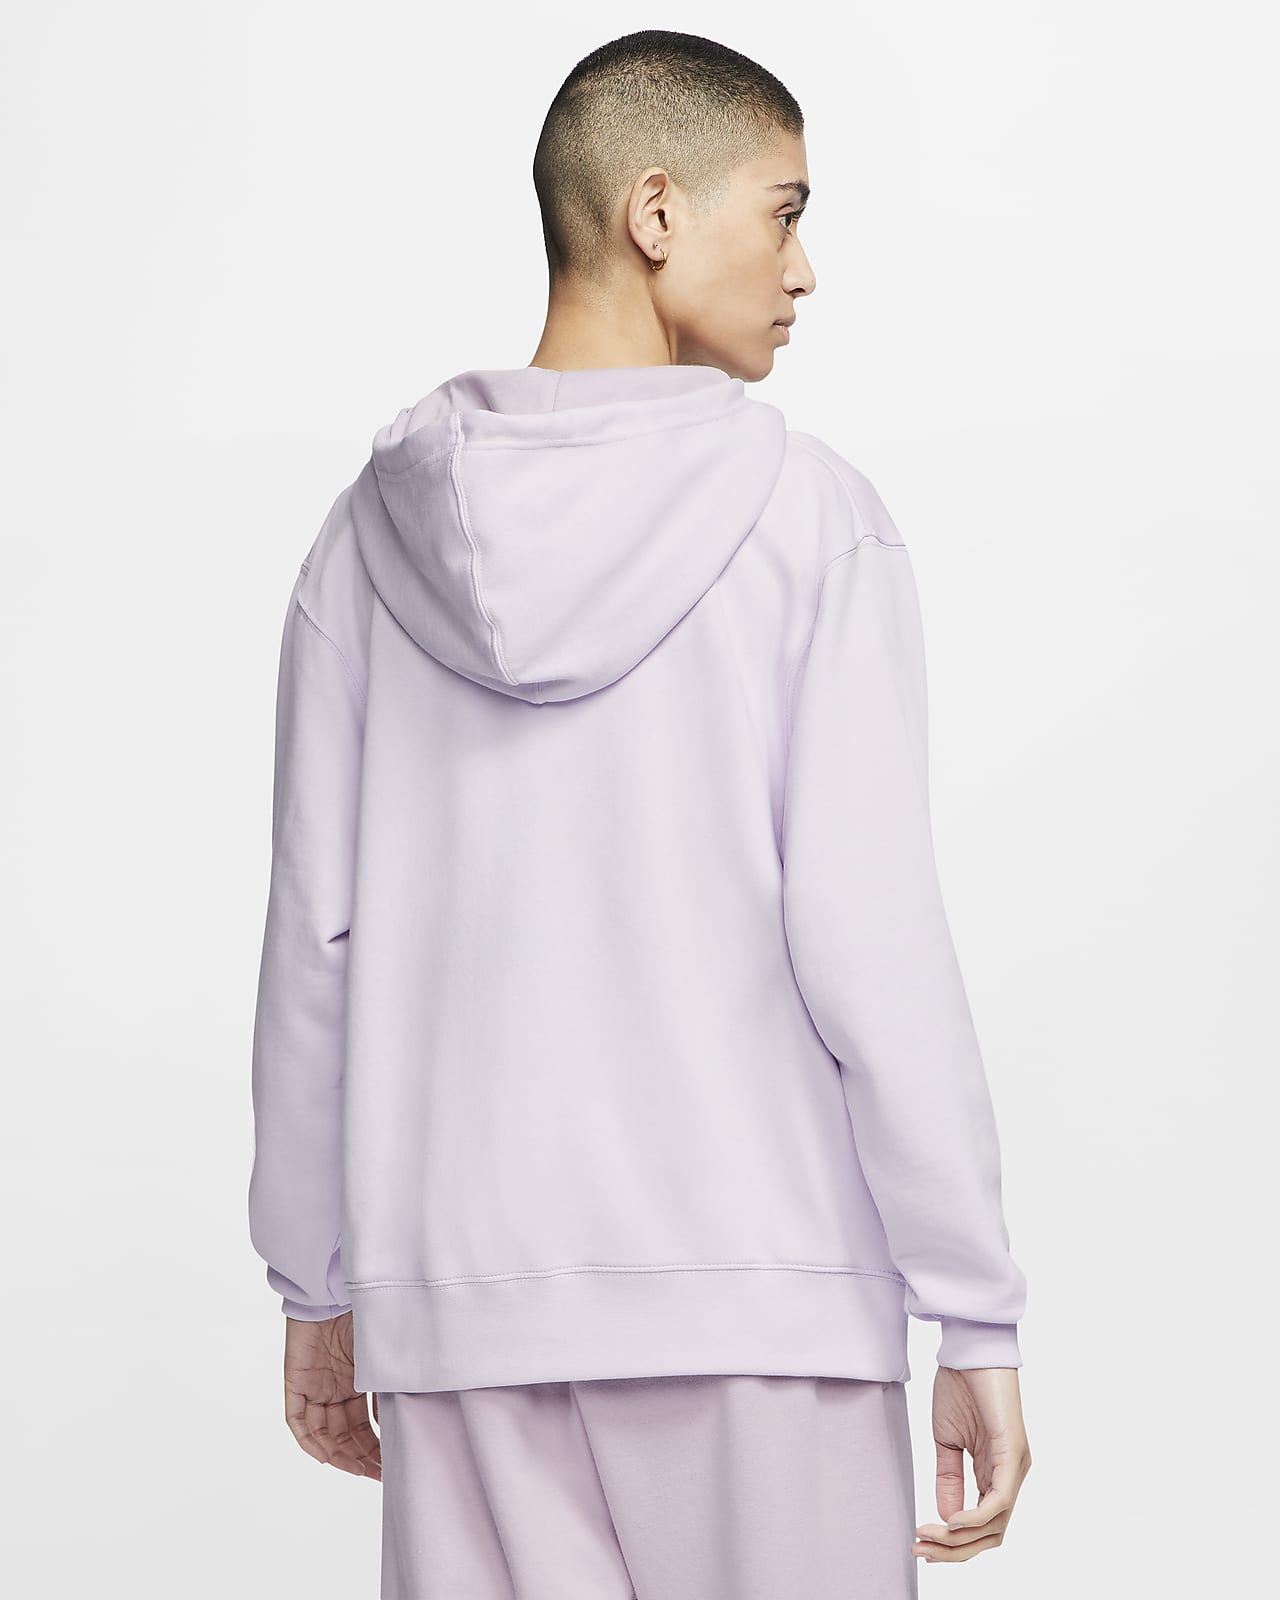 nike swoosh hoodie lilac